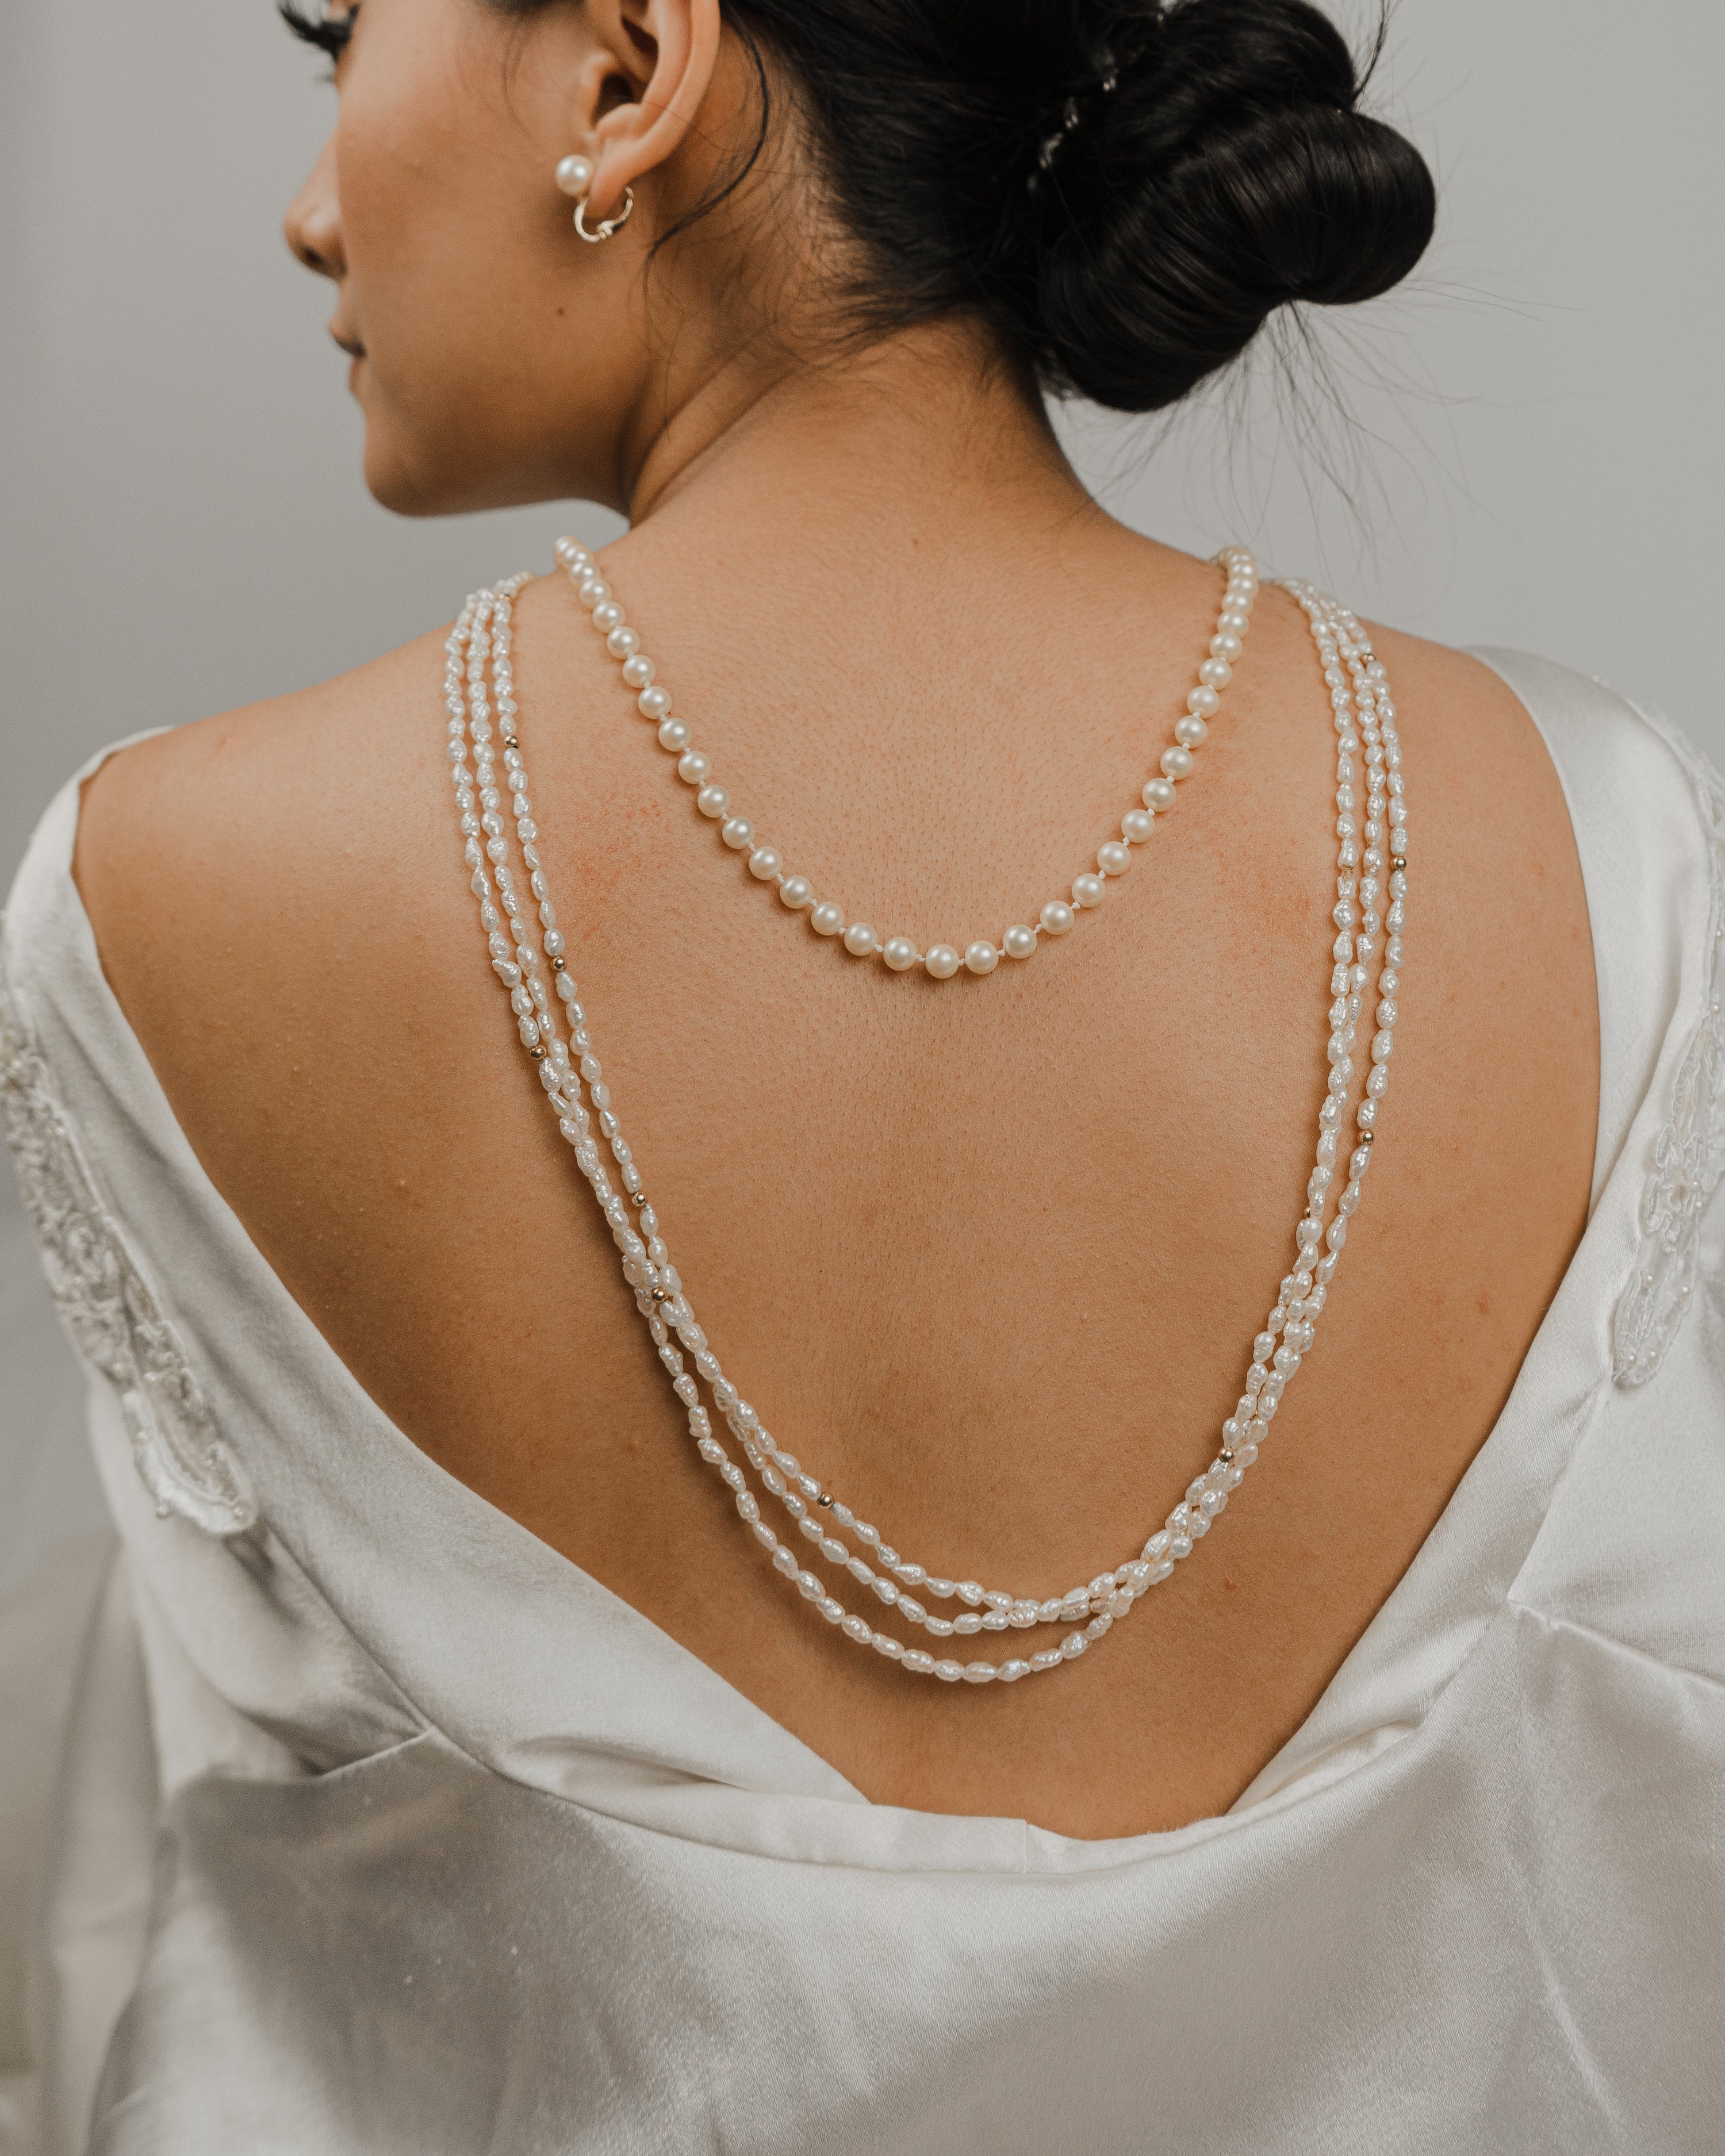 29 Back Wedding Necklaces - The Hottest Trend Right Now - Weddingomania